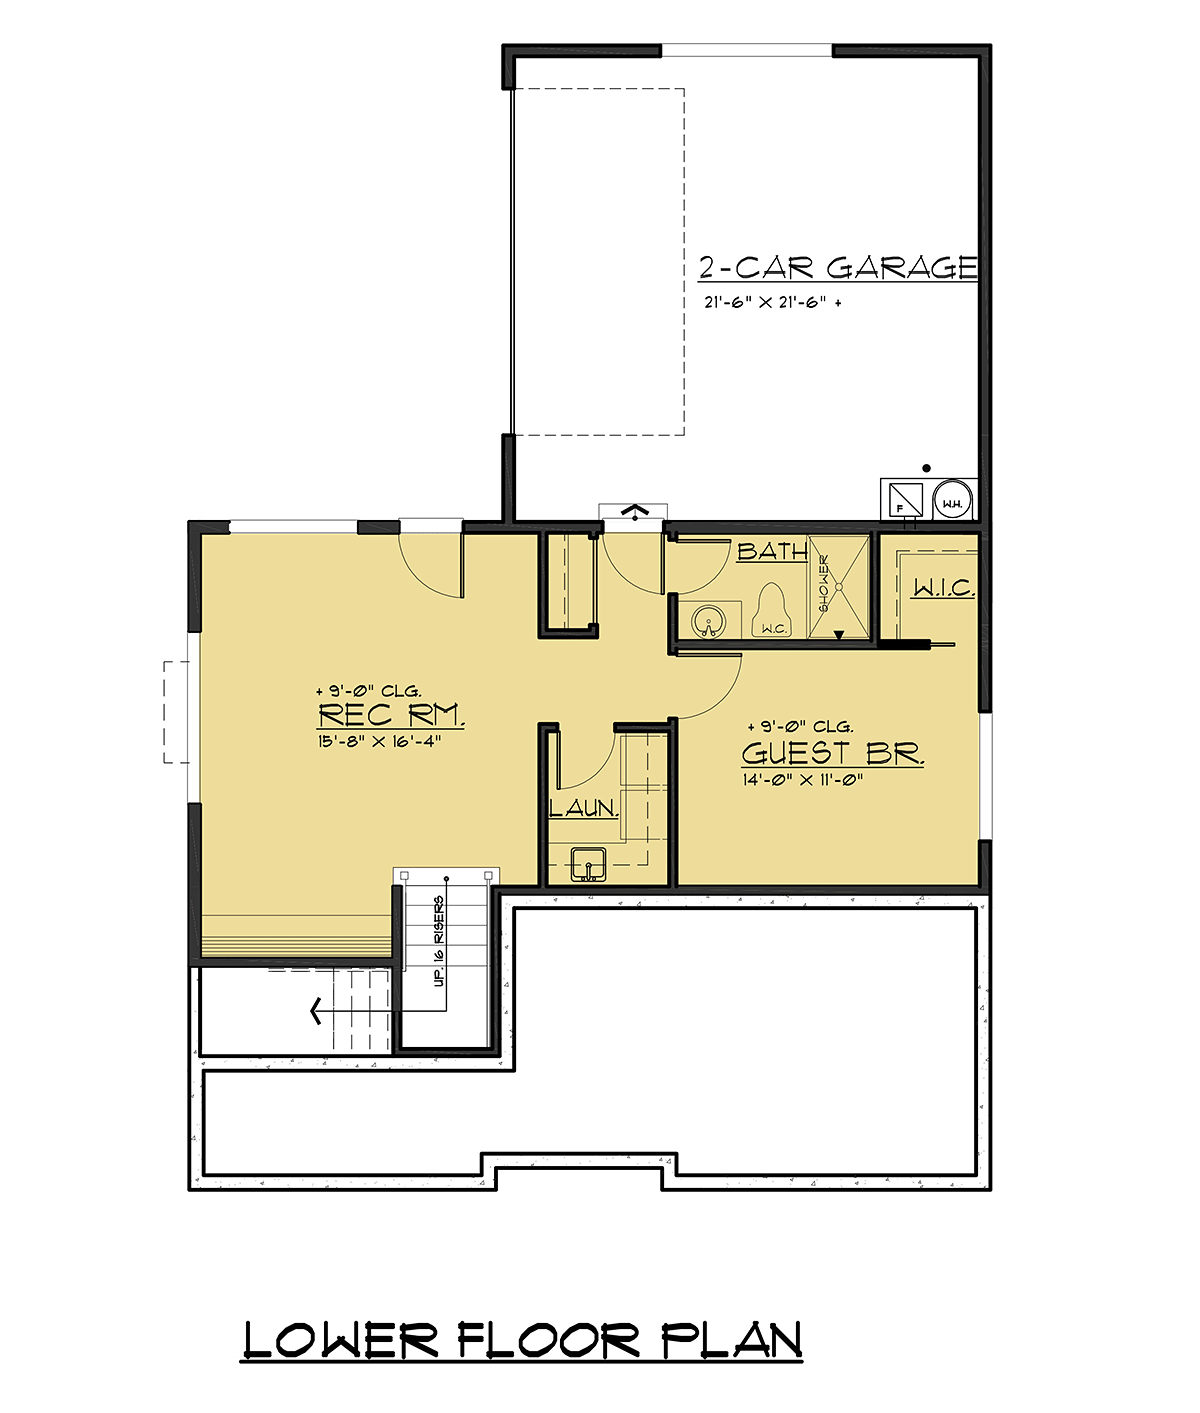 Modern House Plan 81921 with 4 Bed, 4 Bath, 2 Car Garage Lower Level